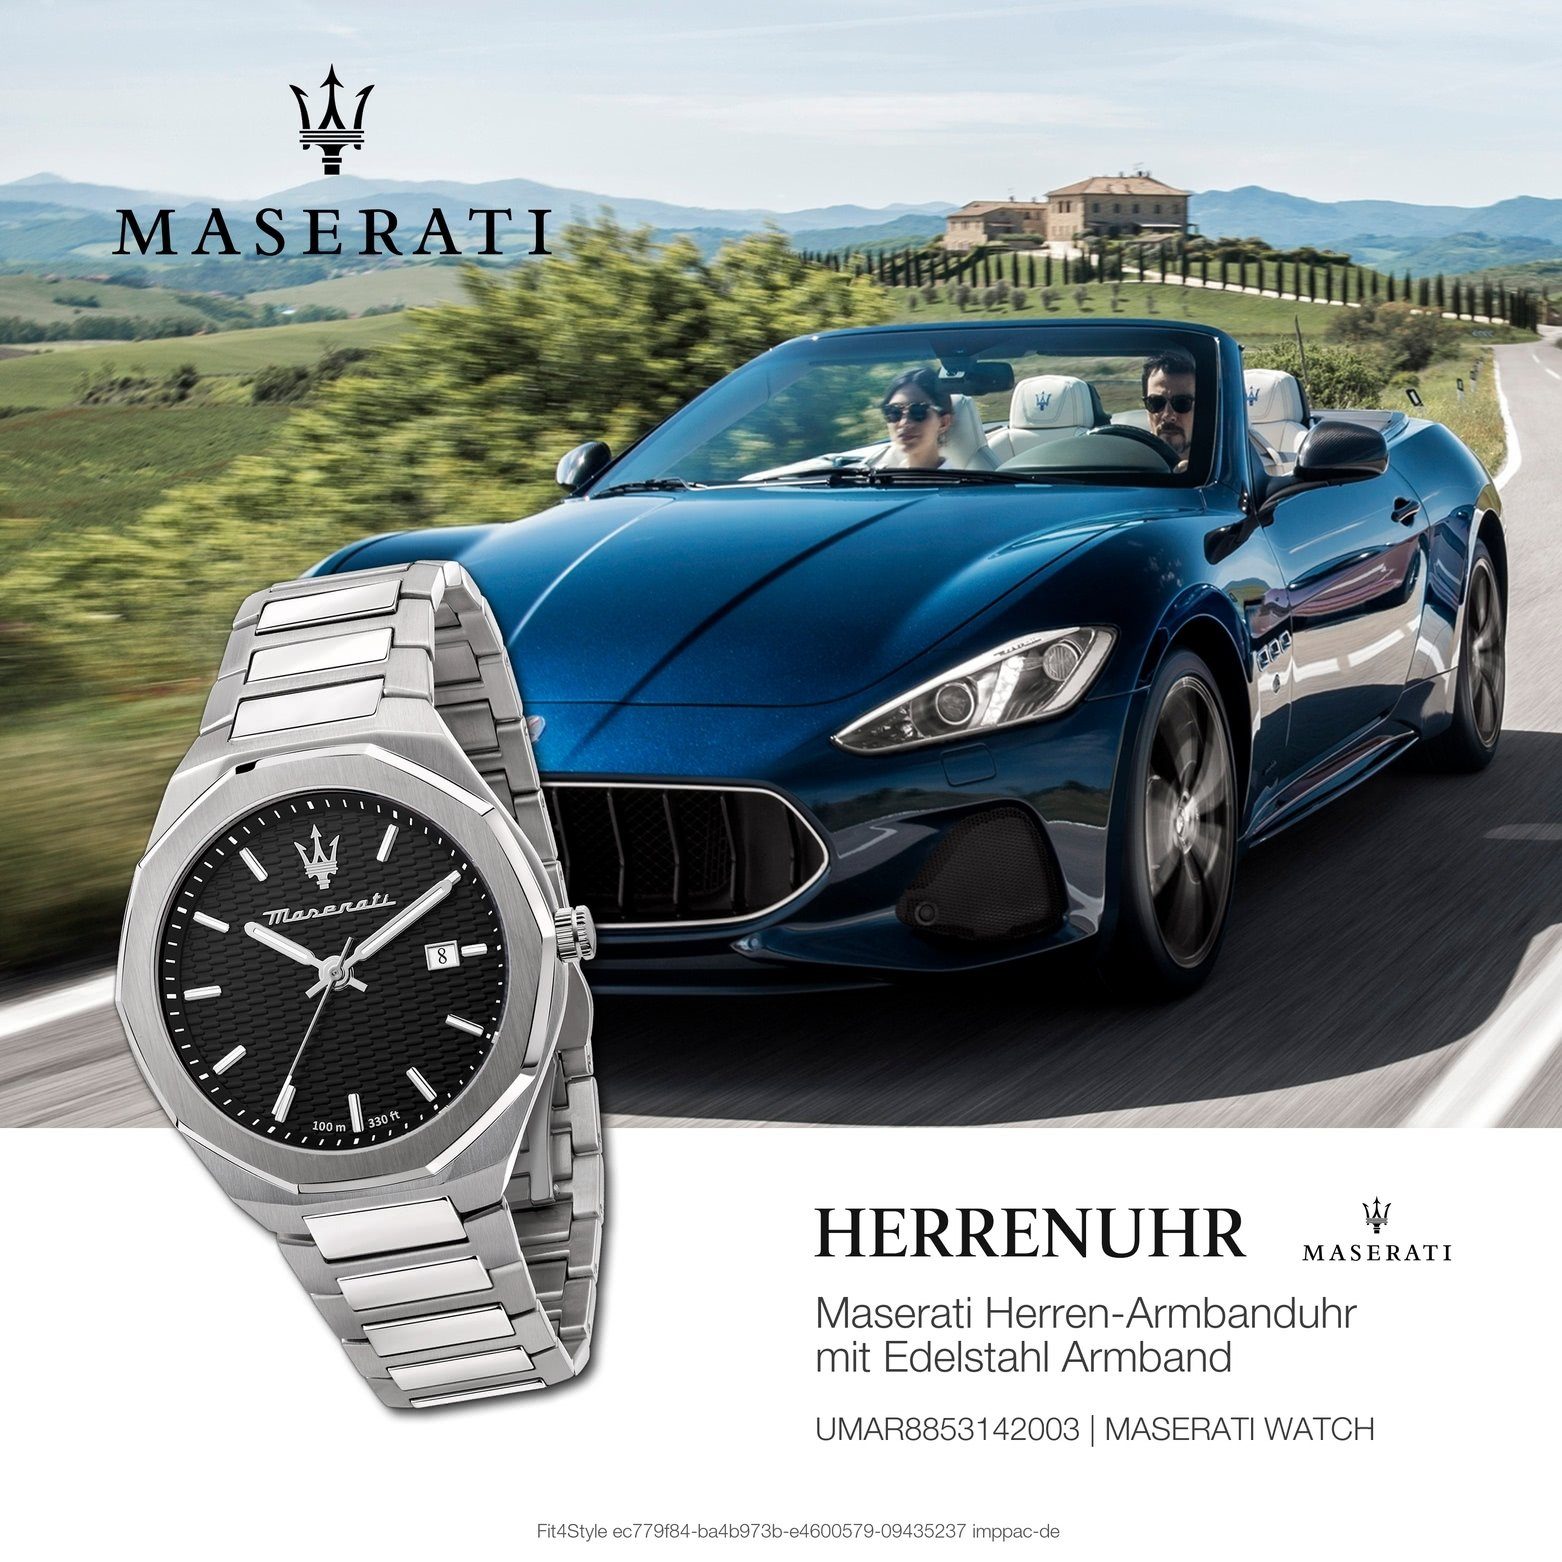 STILE, Uhr Maserati 45mm) Analog rund, Italy Made-In Herren groß Quarzuhr Edelstahlarmband, MASERATI (ca. Herrenuhr